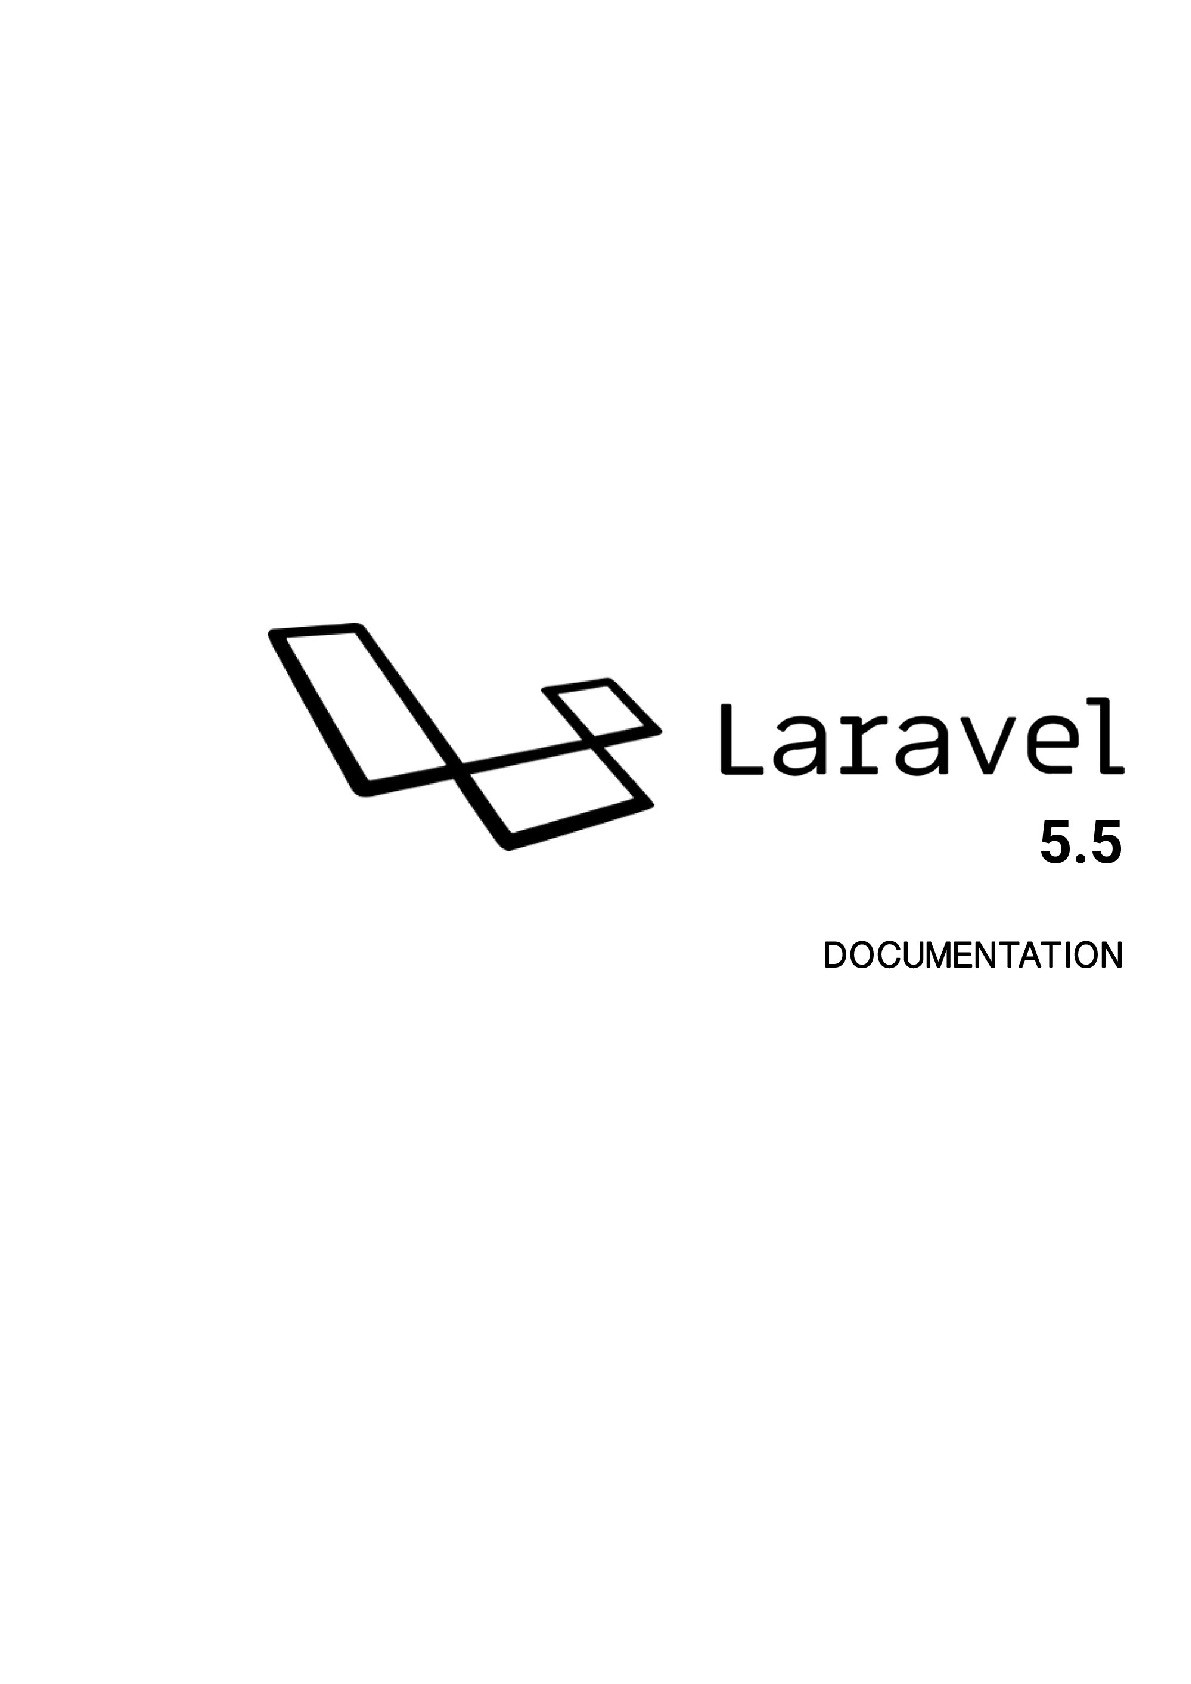 laravel-docs-5.5